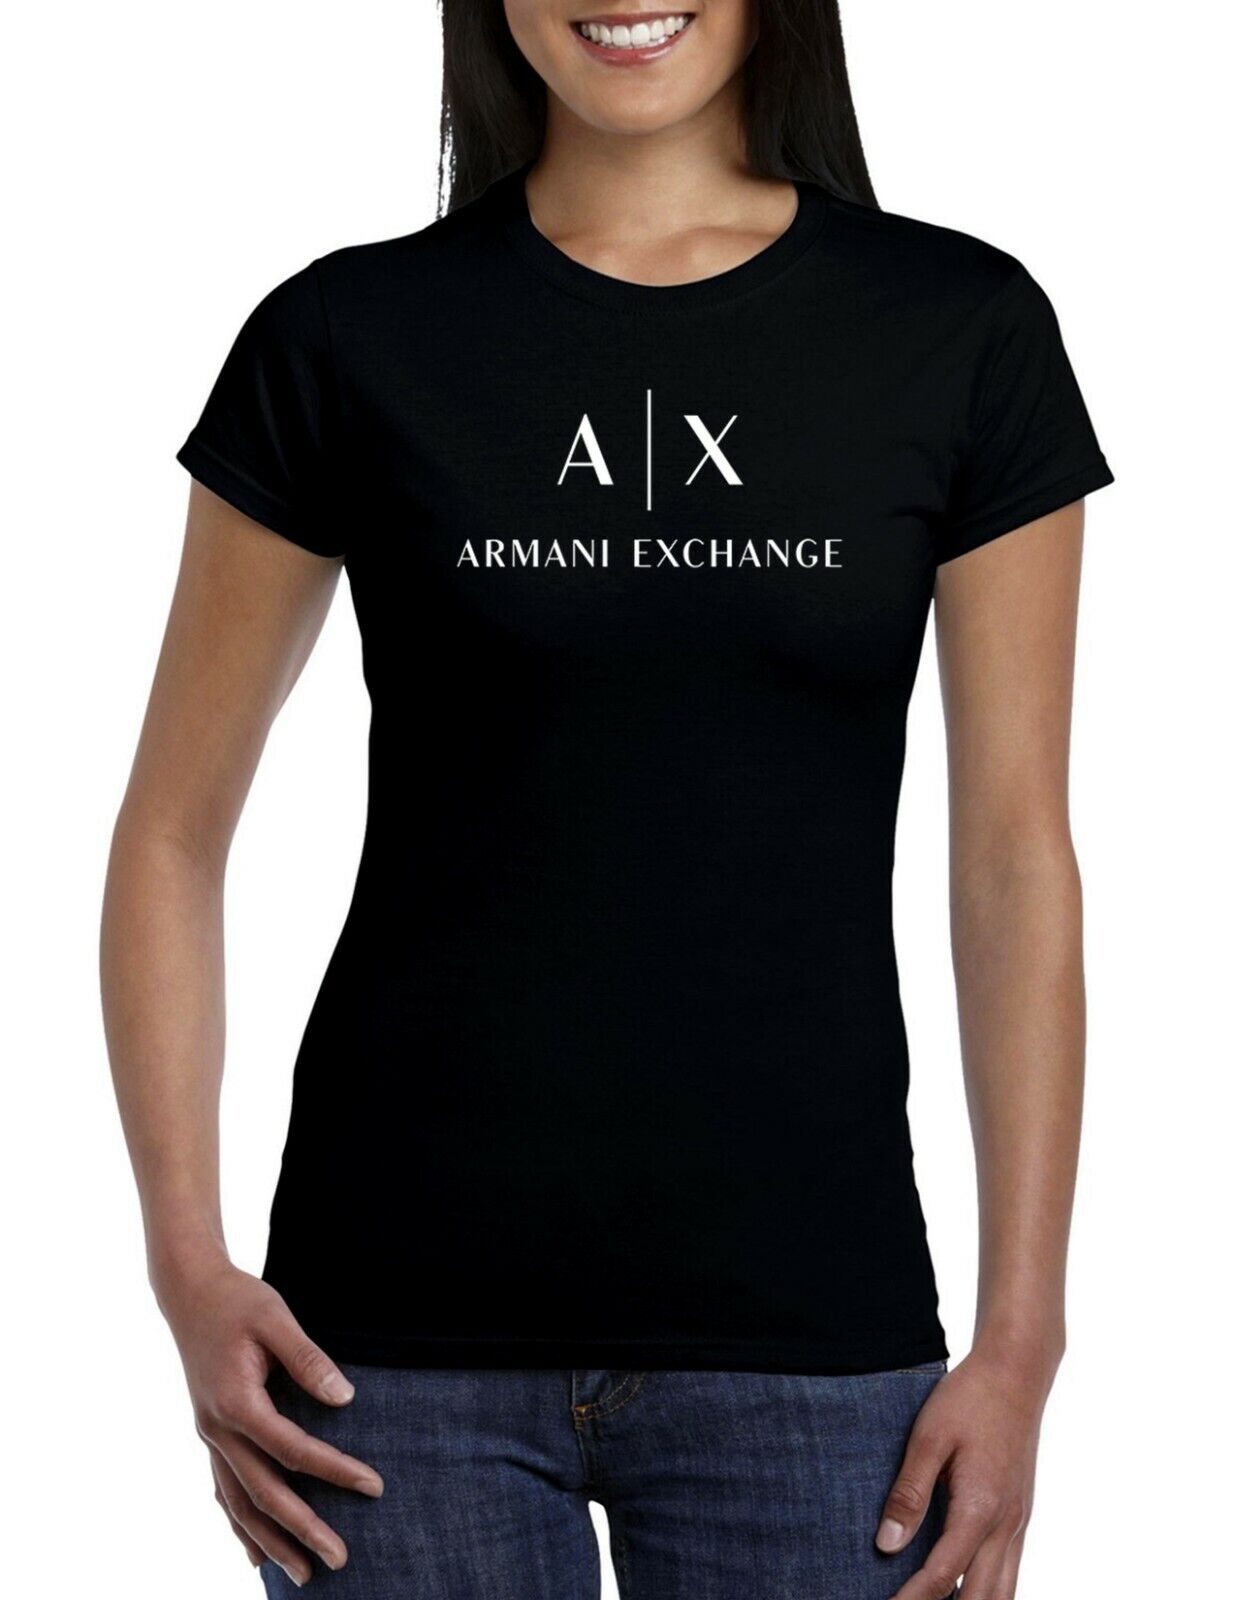 fungere Overskyet fælde For Women AX Armani Exchange. Women's Tee. Crew Neck. Short Sleeves T-Shirts  | eBay